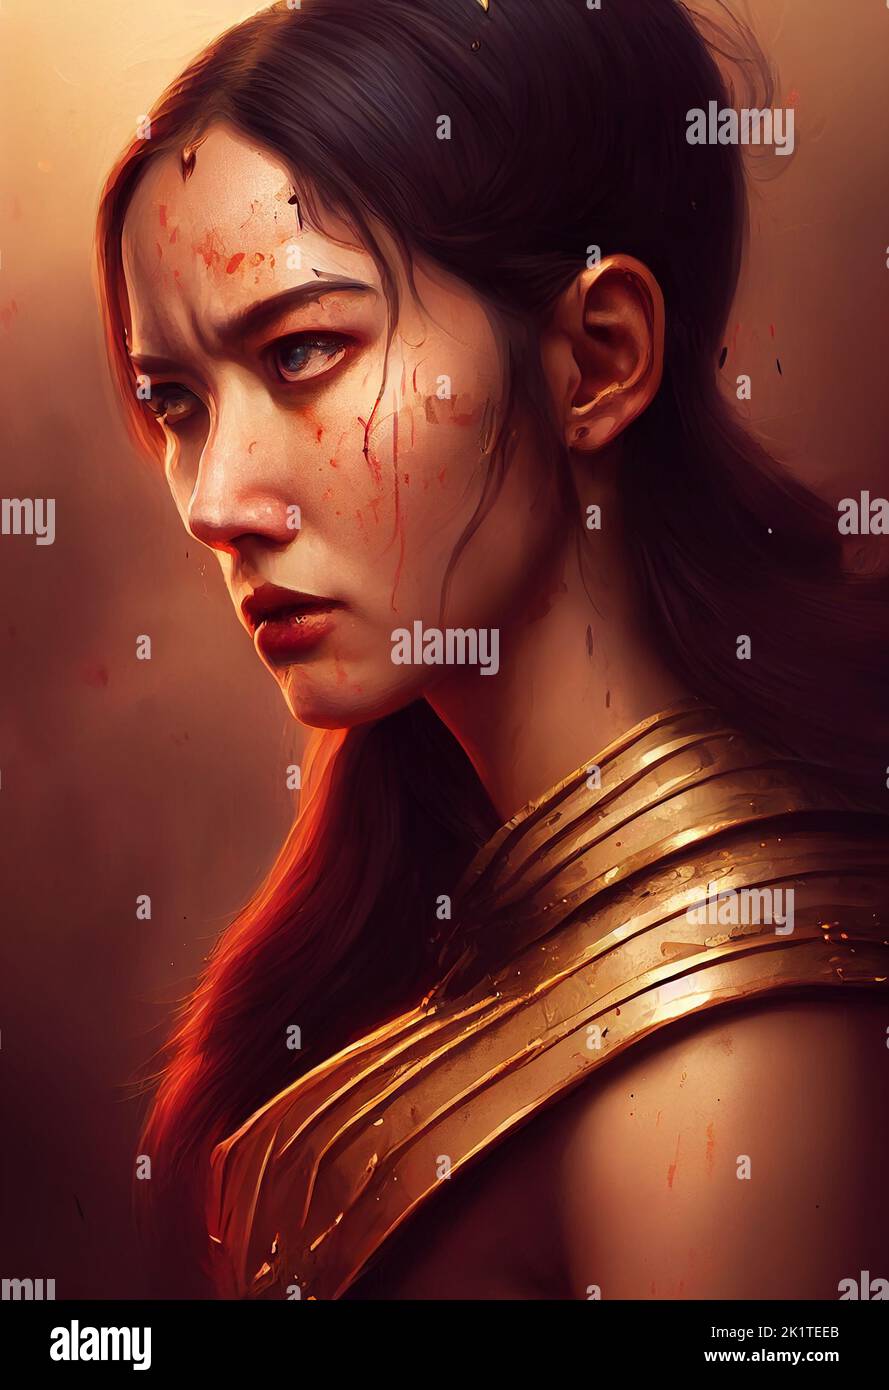 A 3D render of a determined warrior-empress seeking revenge - female fantasy protagonist digital art Stock Photo